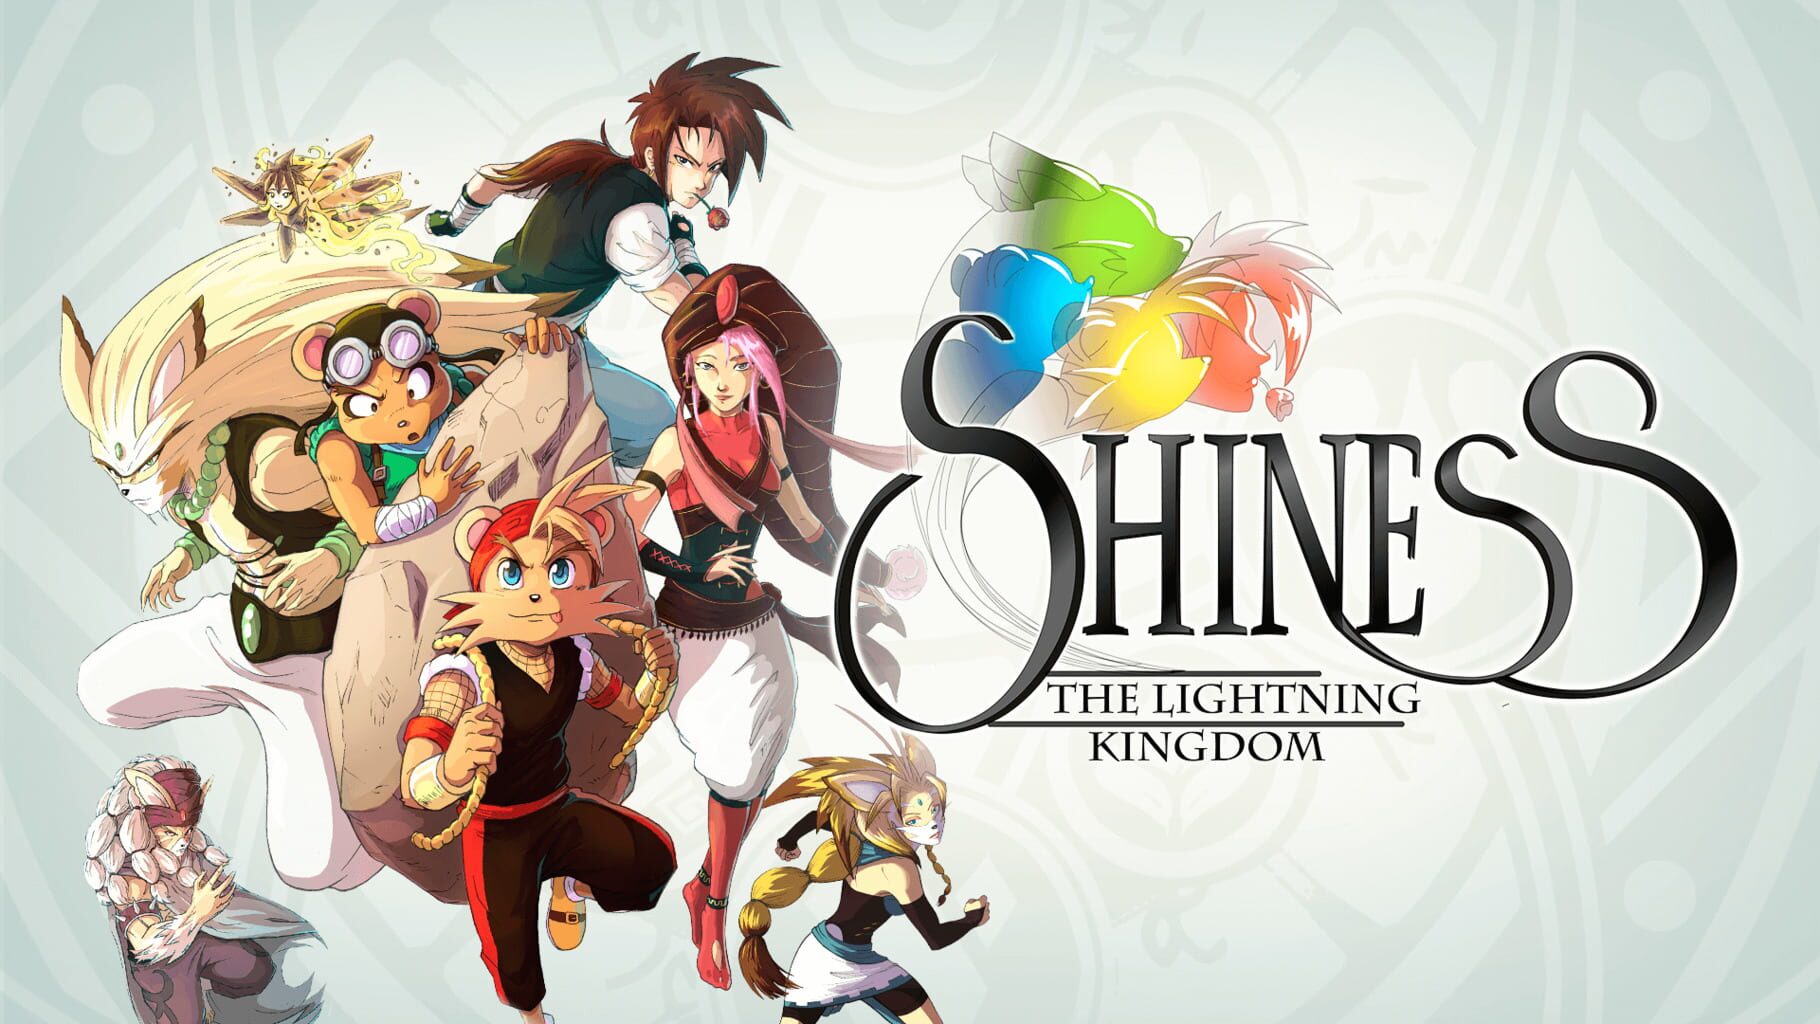 Artwork for Shiness: The Lightning Kingdom